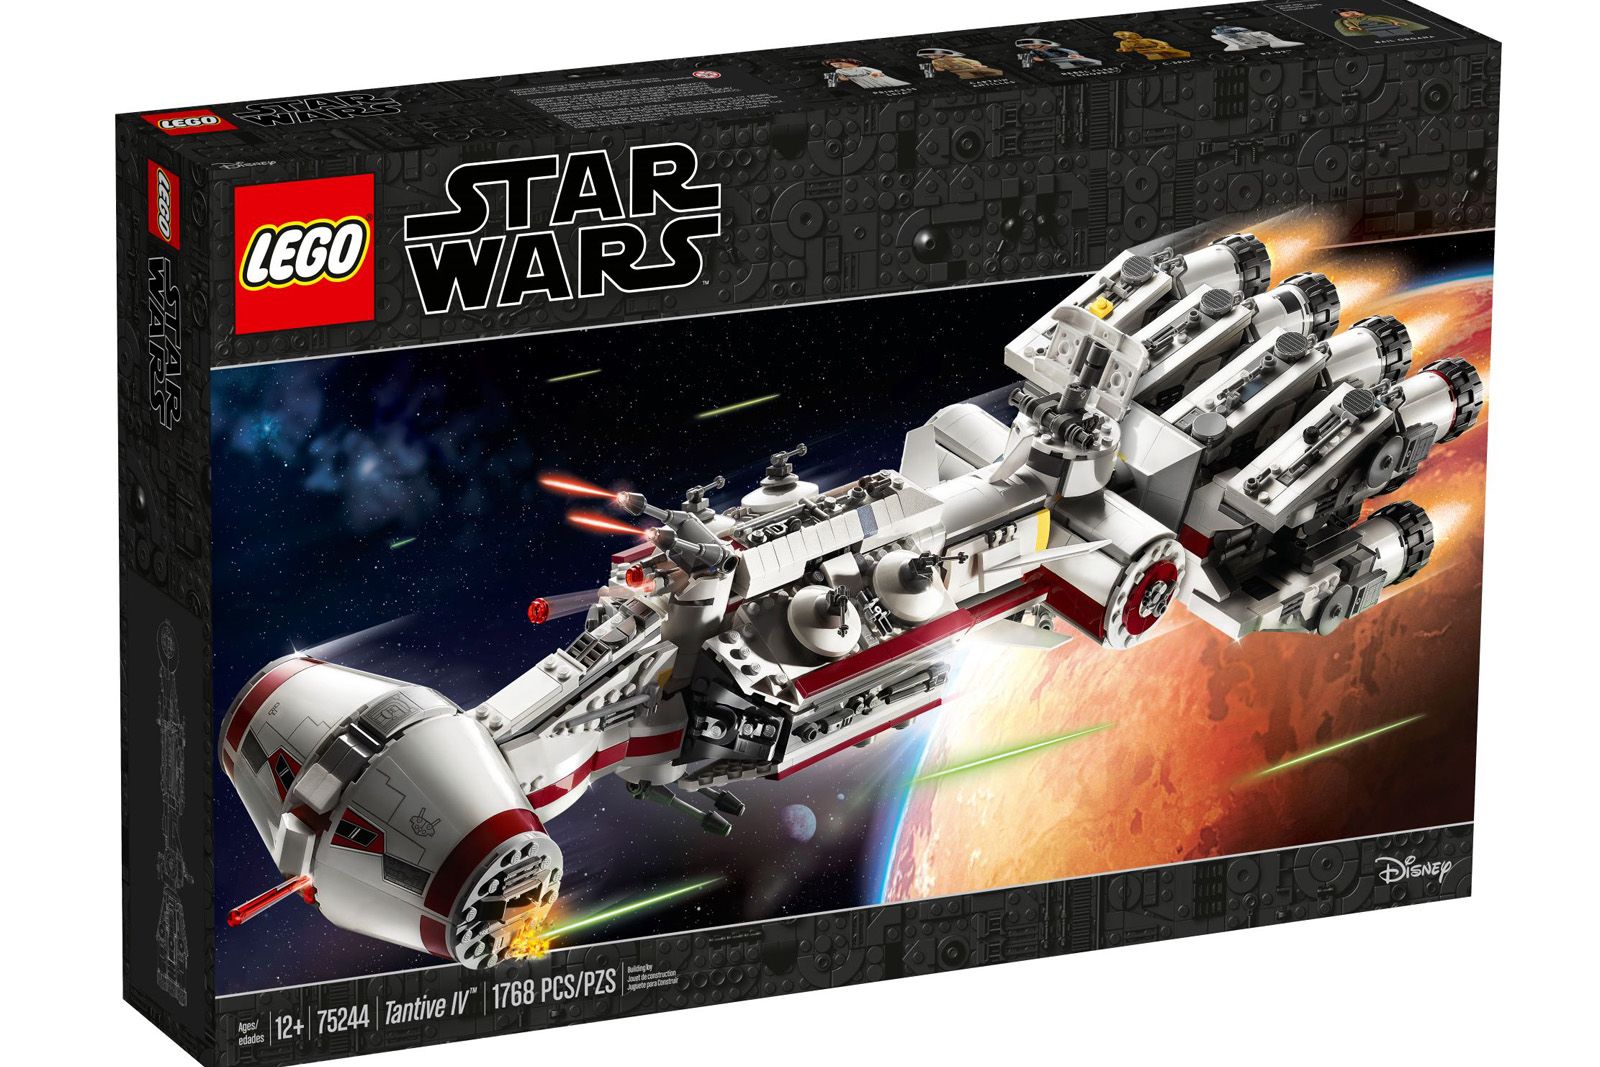 Lego Star Wars image 2